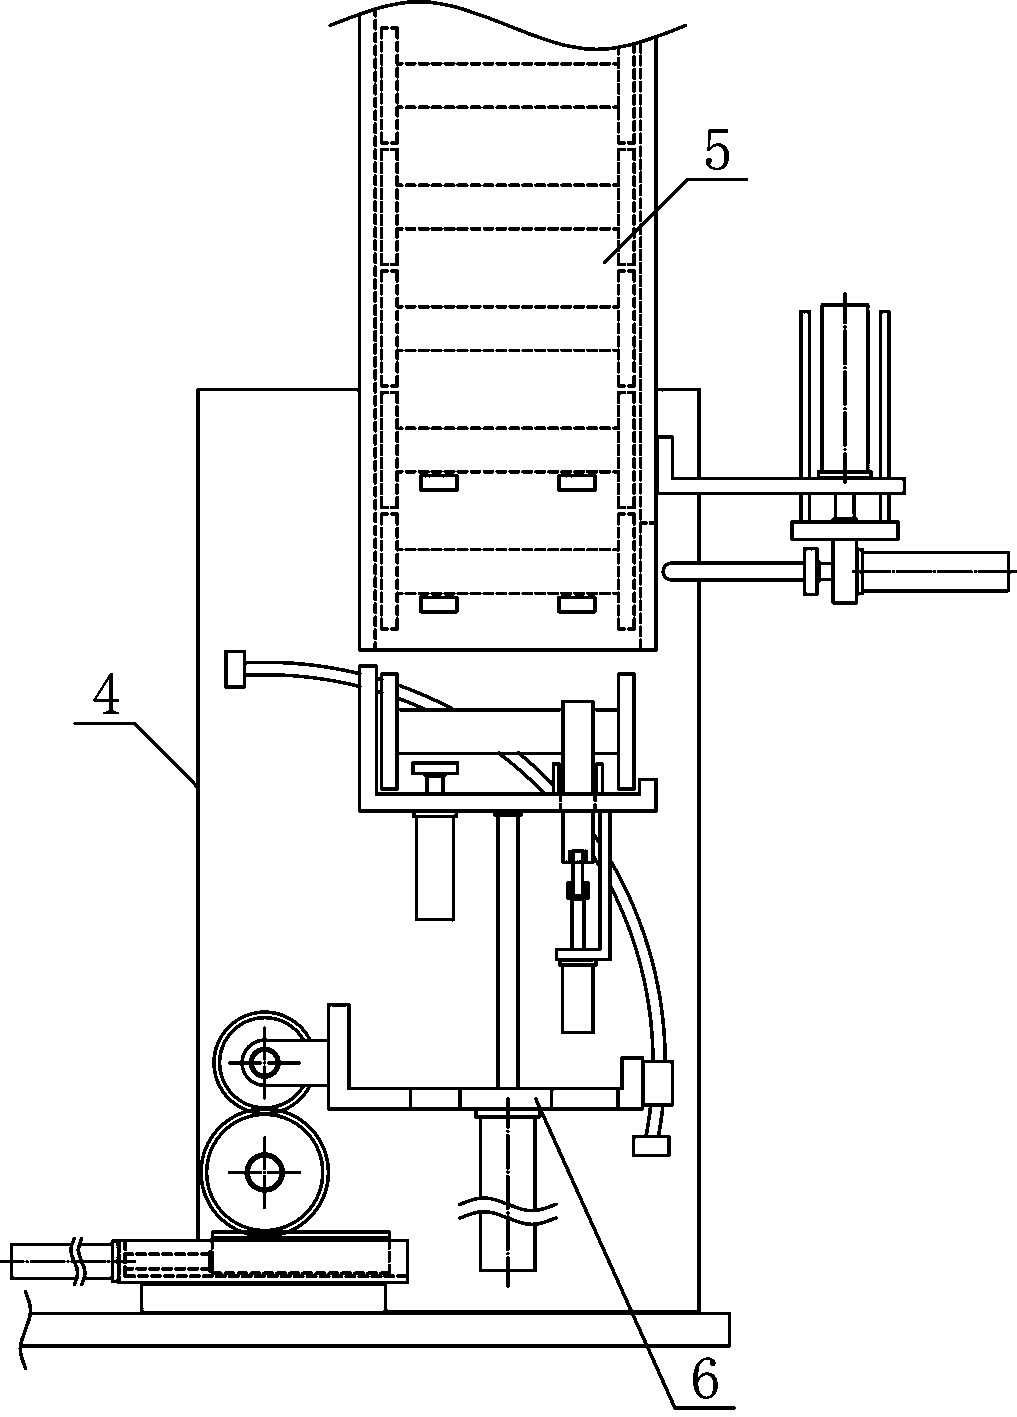 Automatic feeding mechanism for yarn winding drums